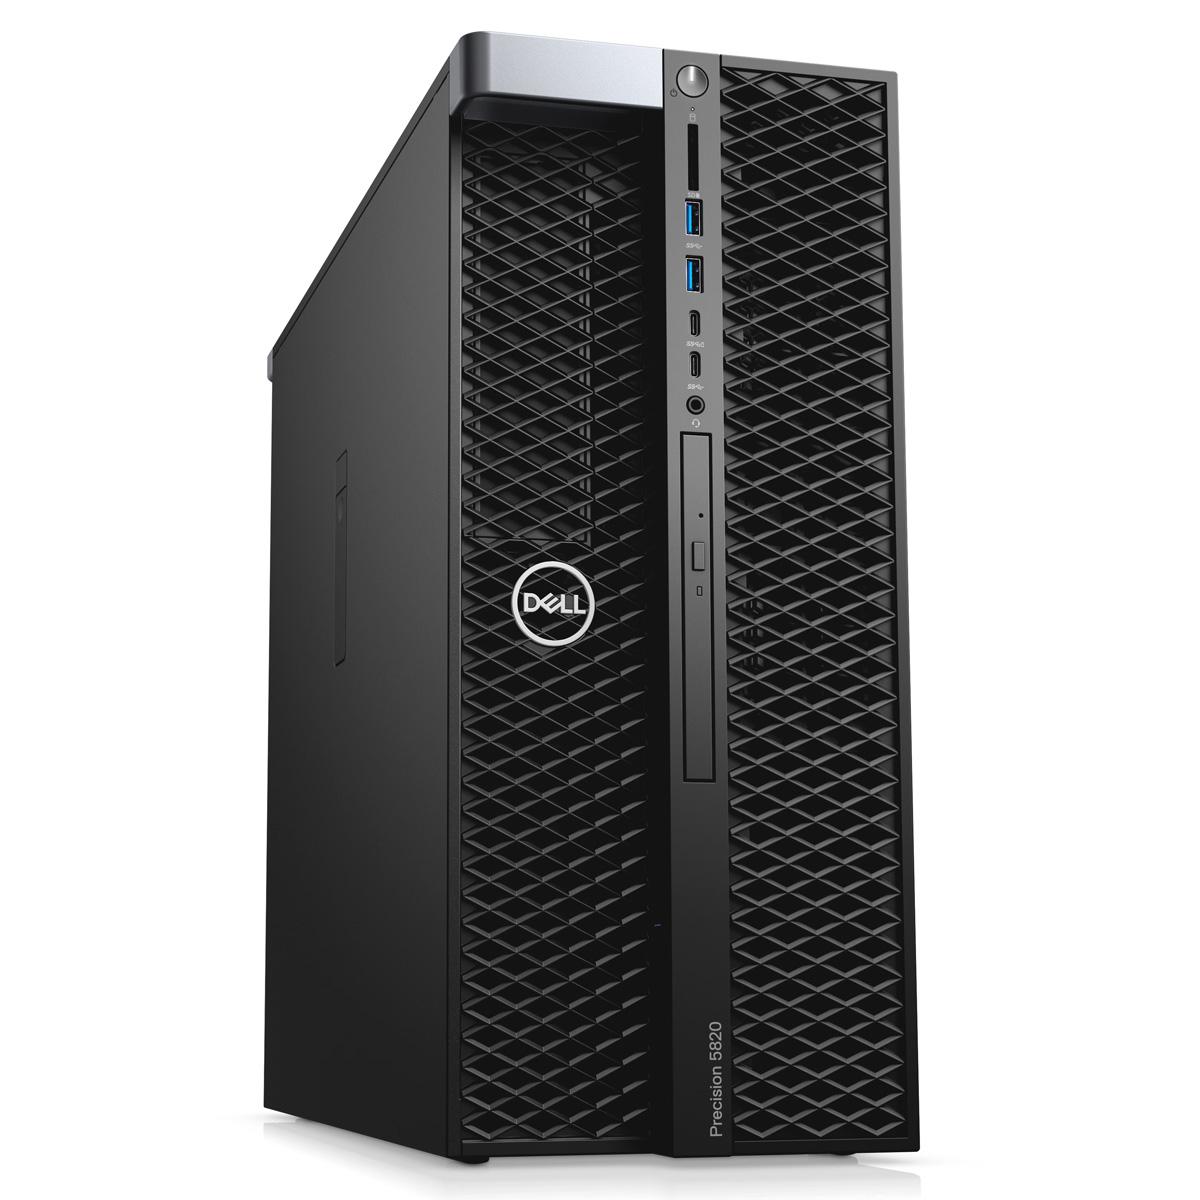 Dell Precision 5820 Intel Quad 8GB 756GB Tower Desktop Computer for $274.50 Shipped